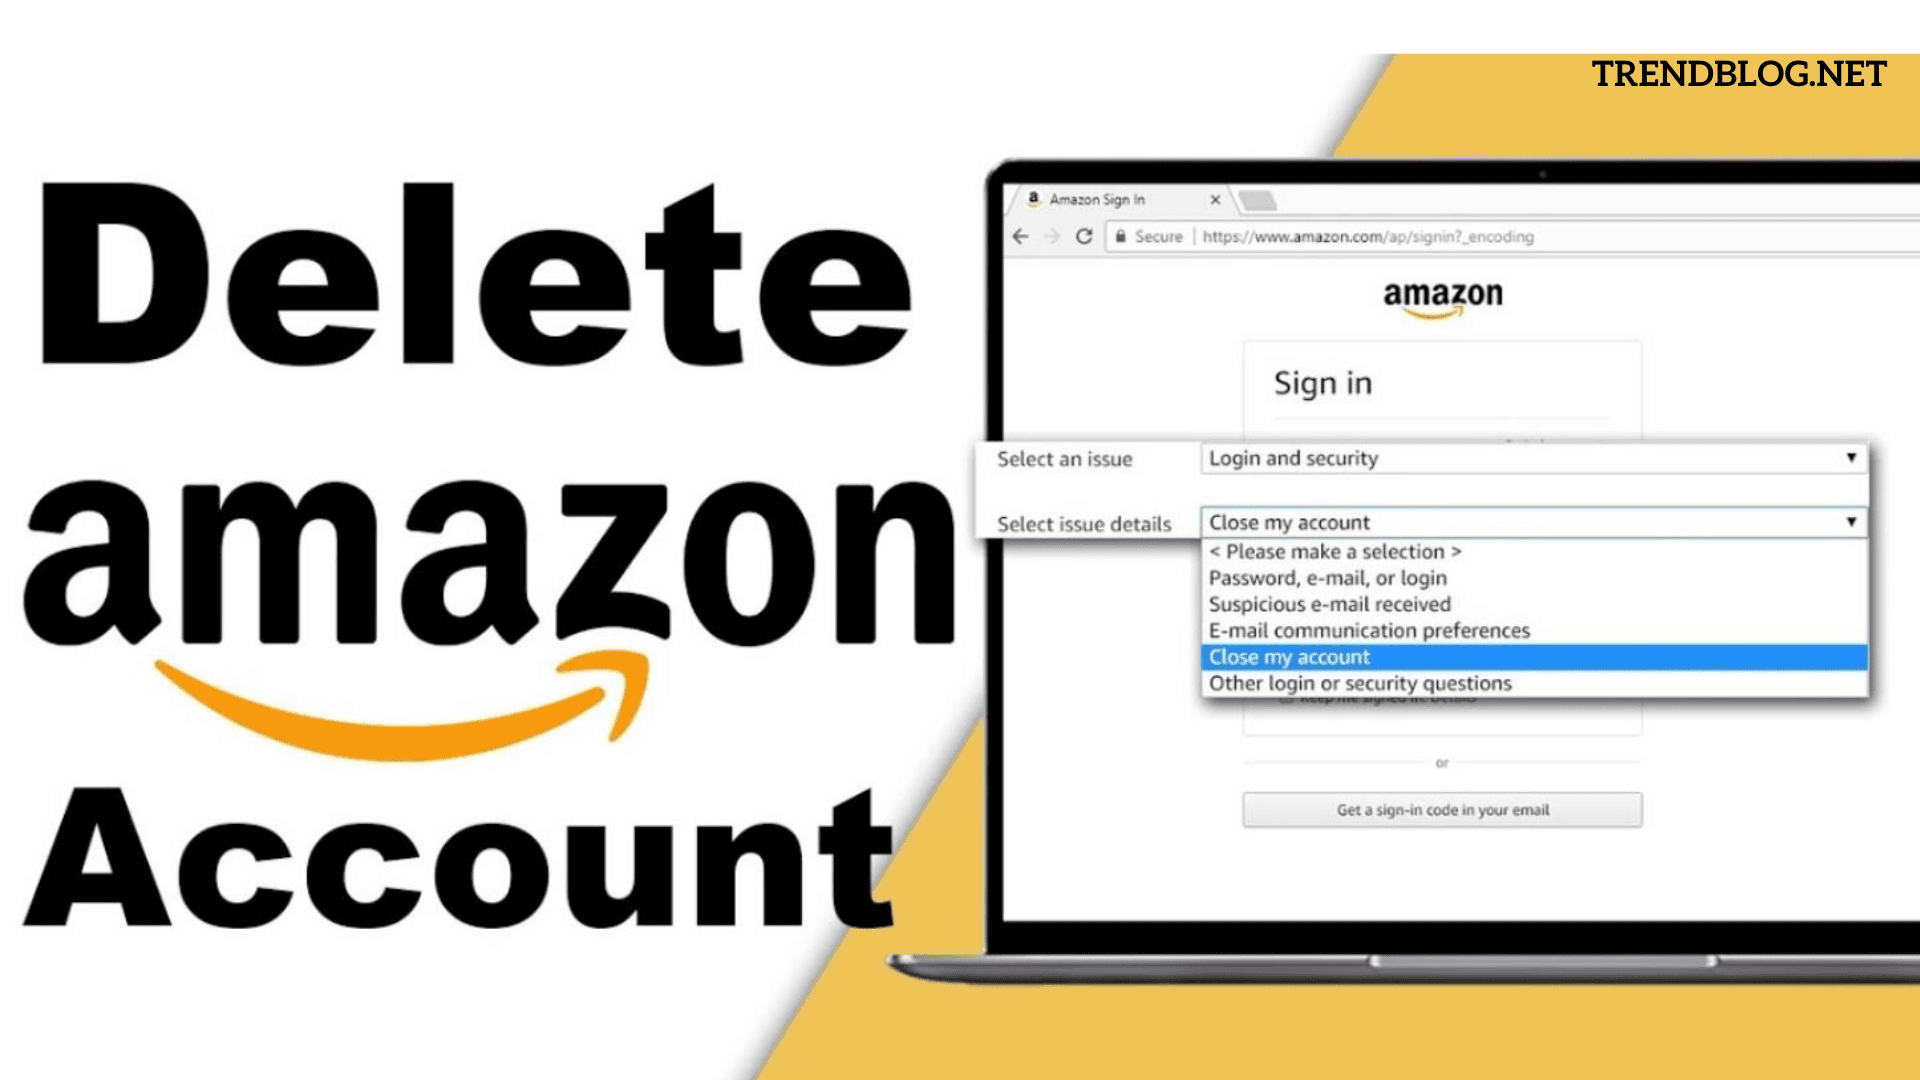 How to delete an Amazon account